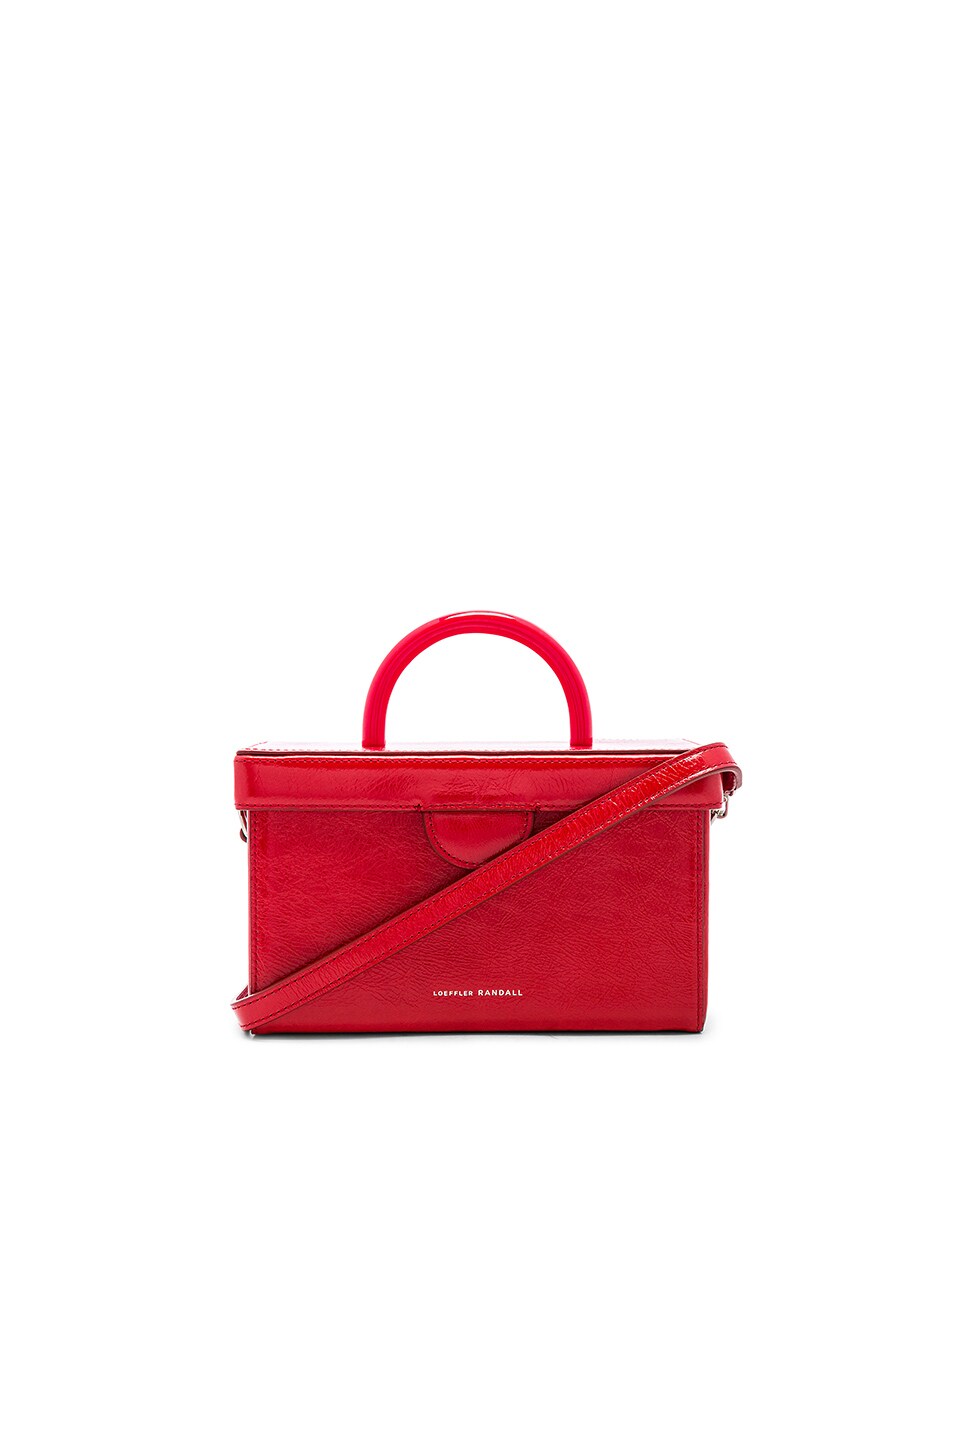 Loeffler Randall Bella Box Bag in Bright Red | REVOLVE